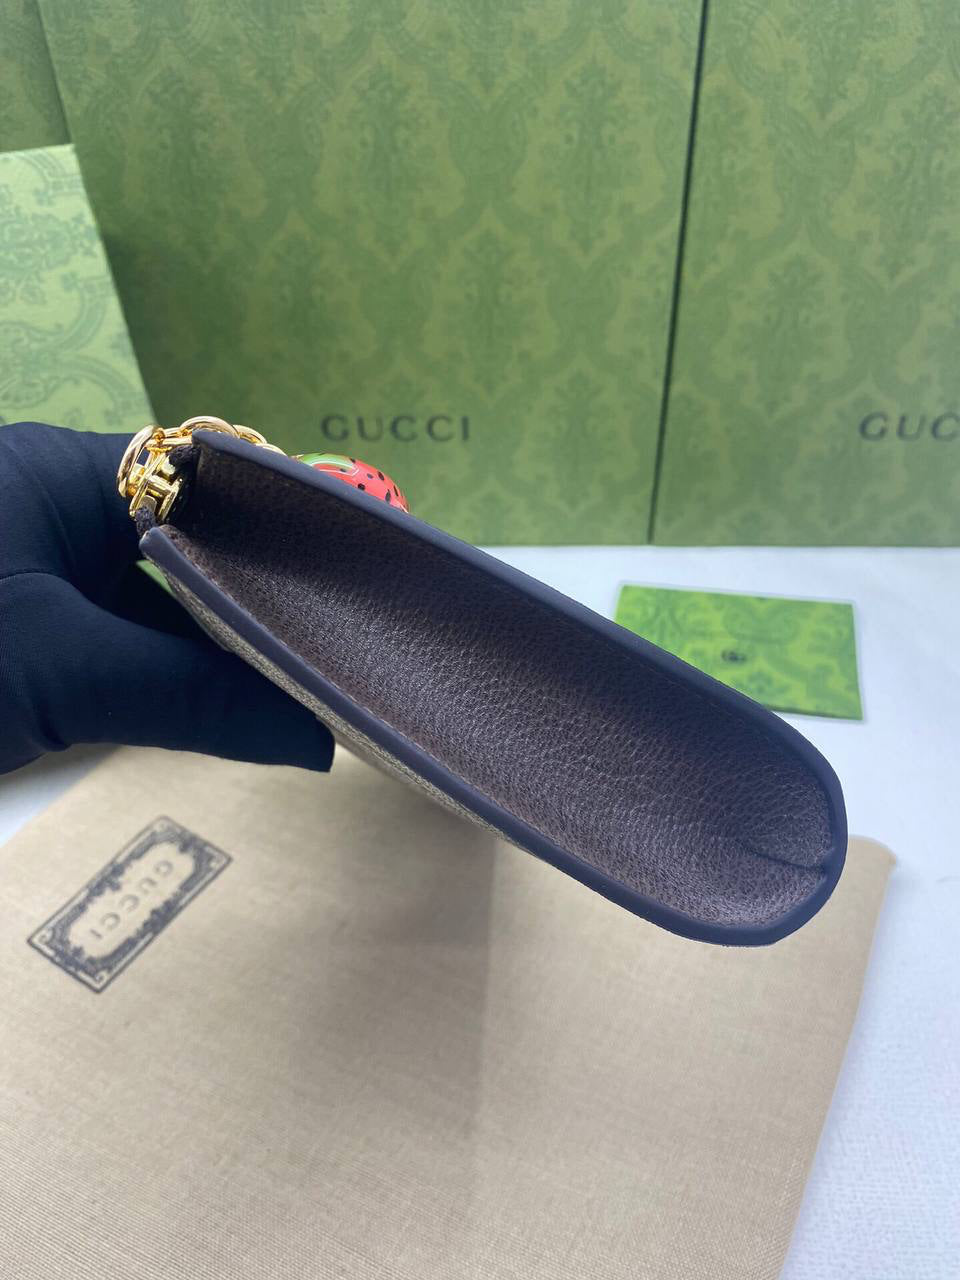 Gucci GG Damier-jacquard coin purse